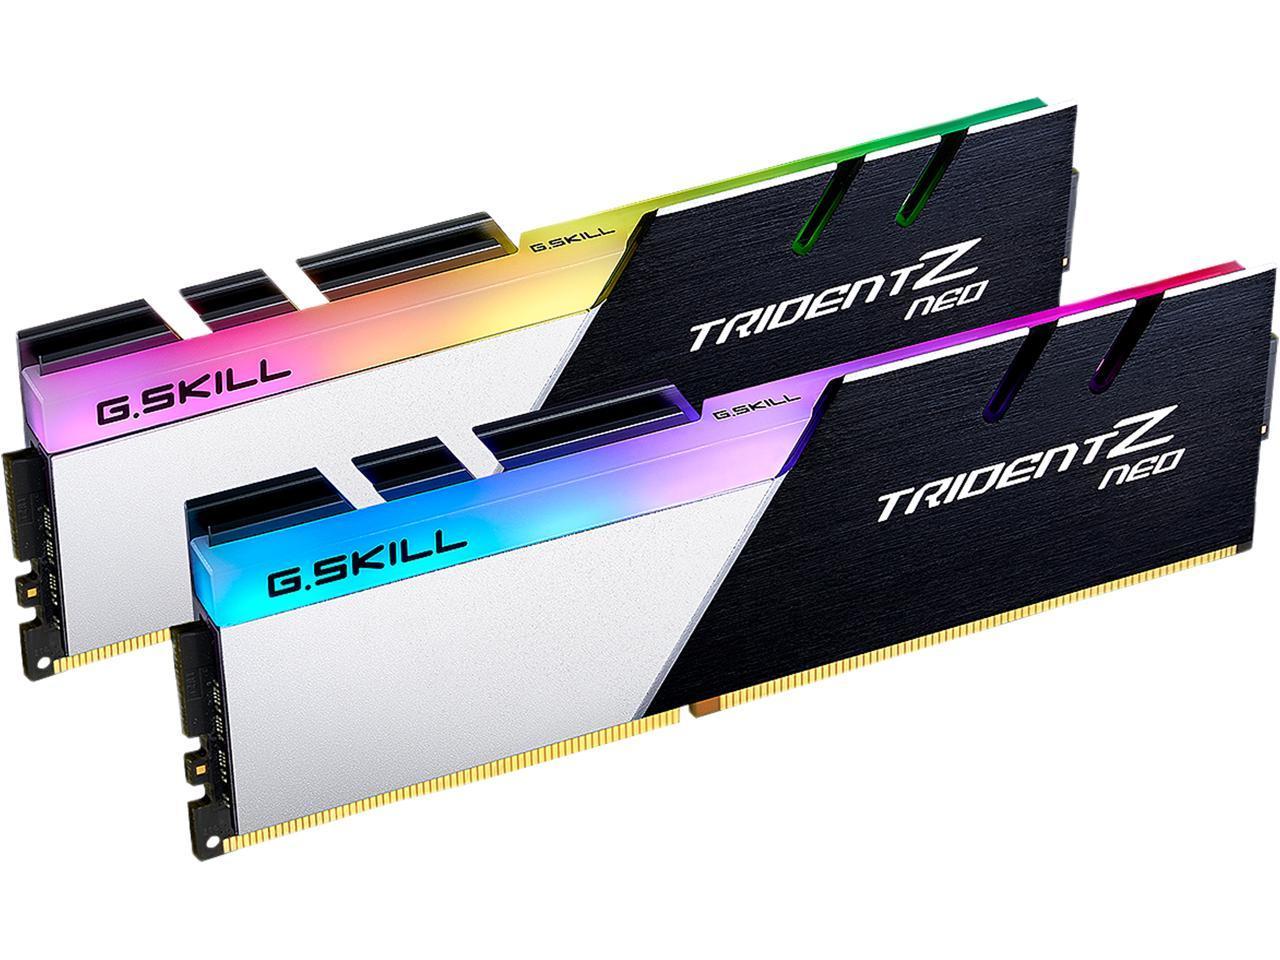 G-SKILL TRIDENT Z NEO RGB SERIES 16G*2 DDR4 3600